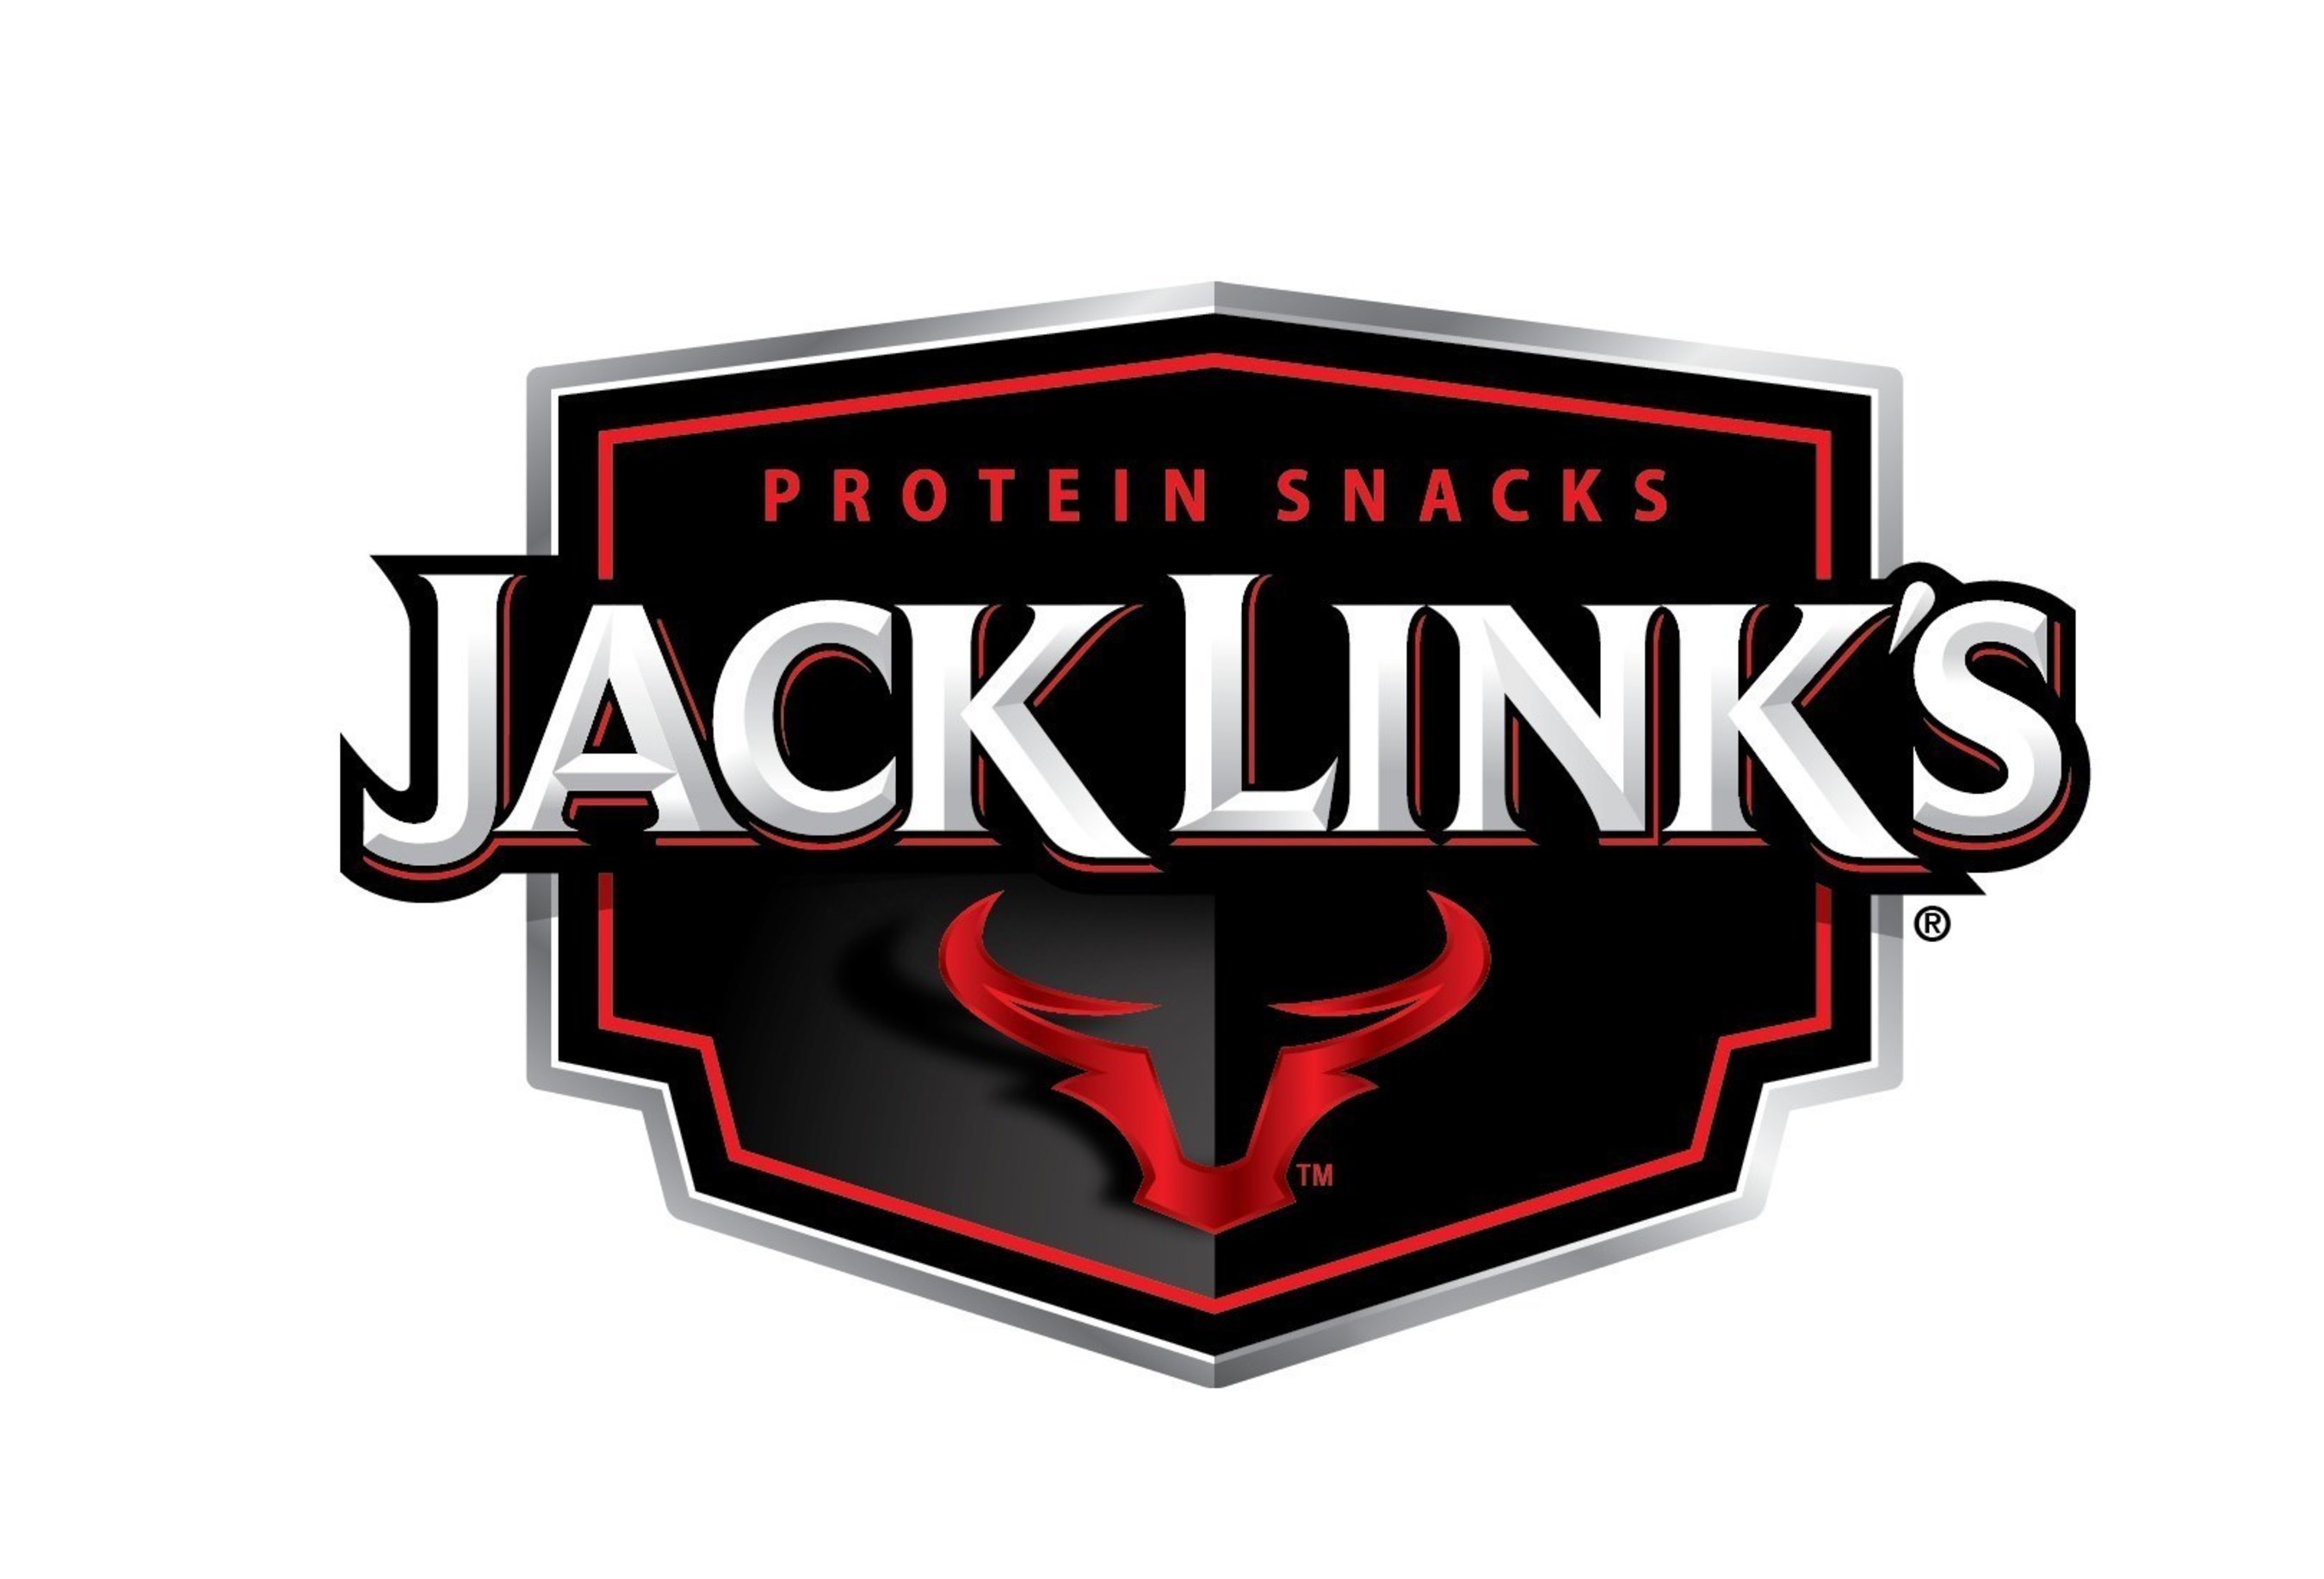 Jack Link's(R) Protein Snacks